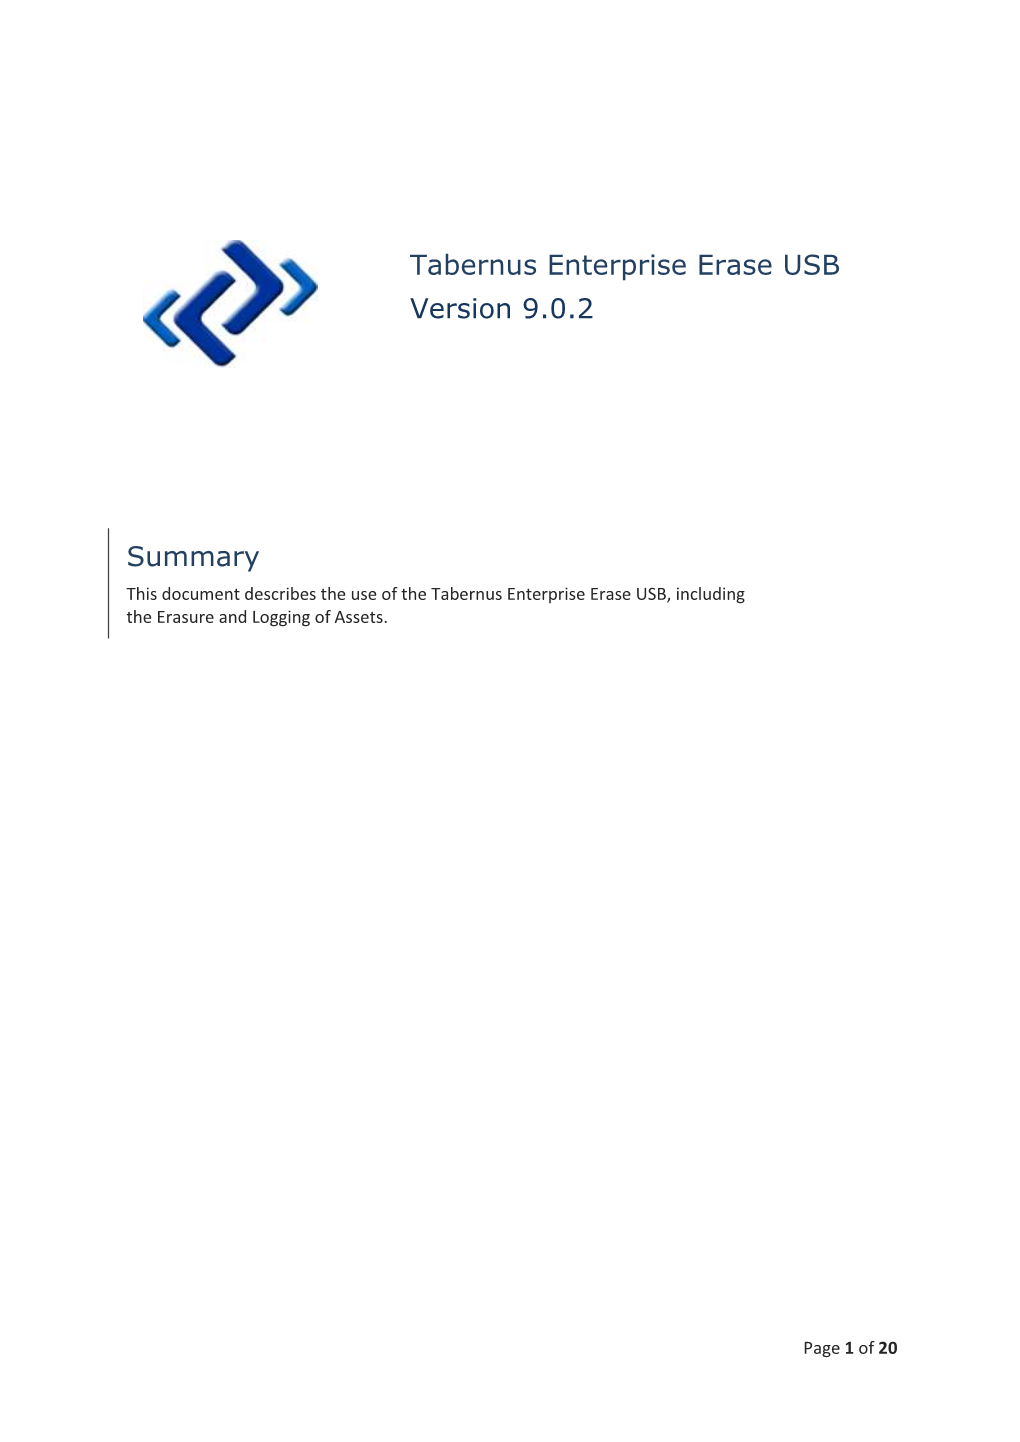 Tabernus Enterprise Erase USB Version 9.0.2 Summary